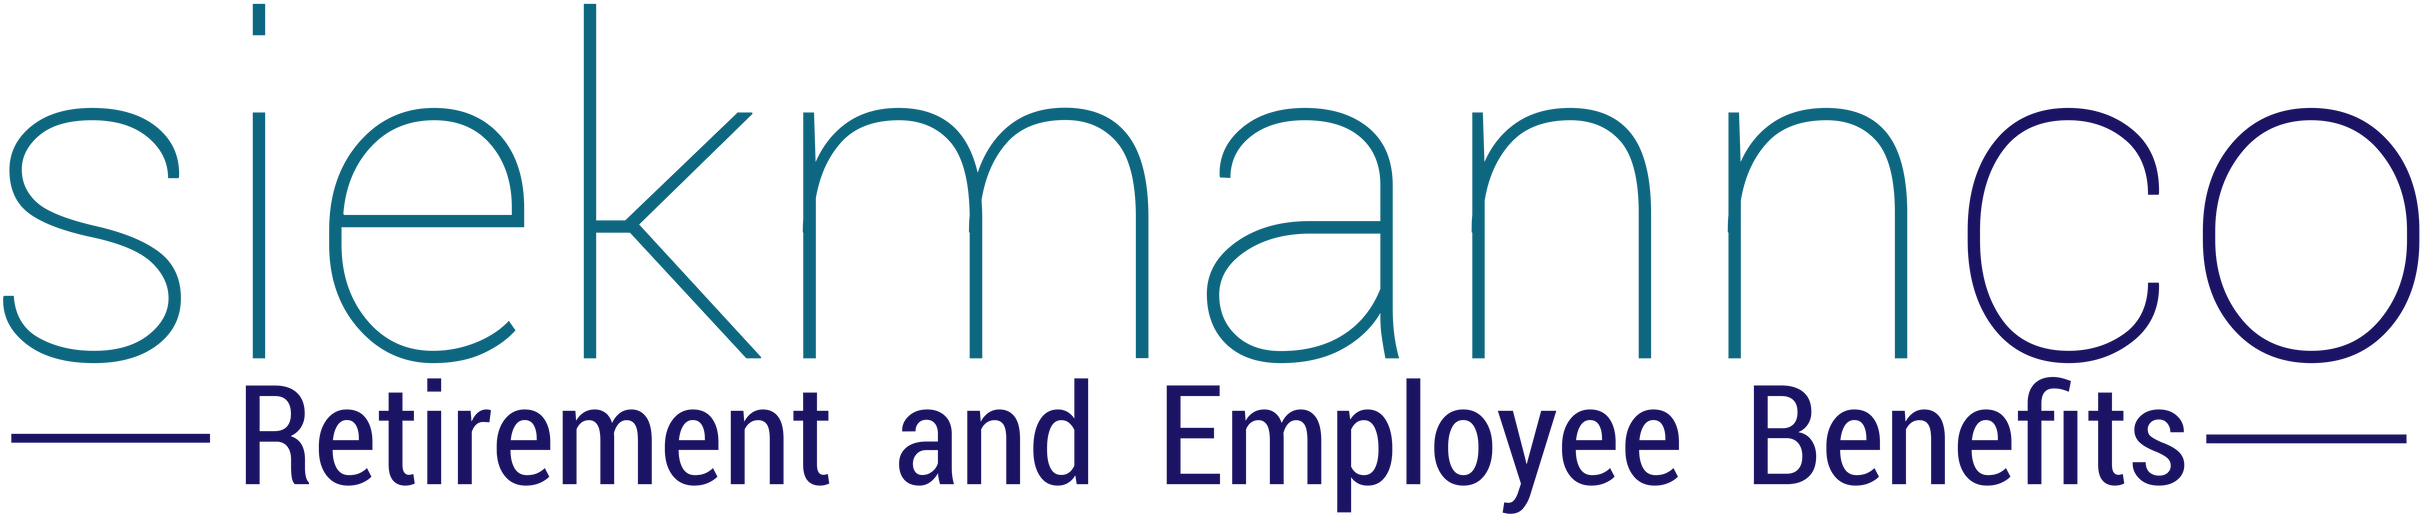 Retirementand Employee Benefits Company Logo PNG